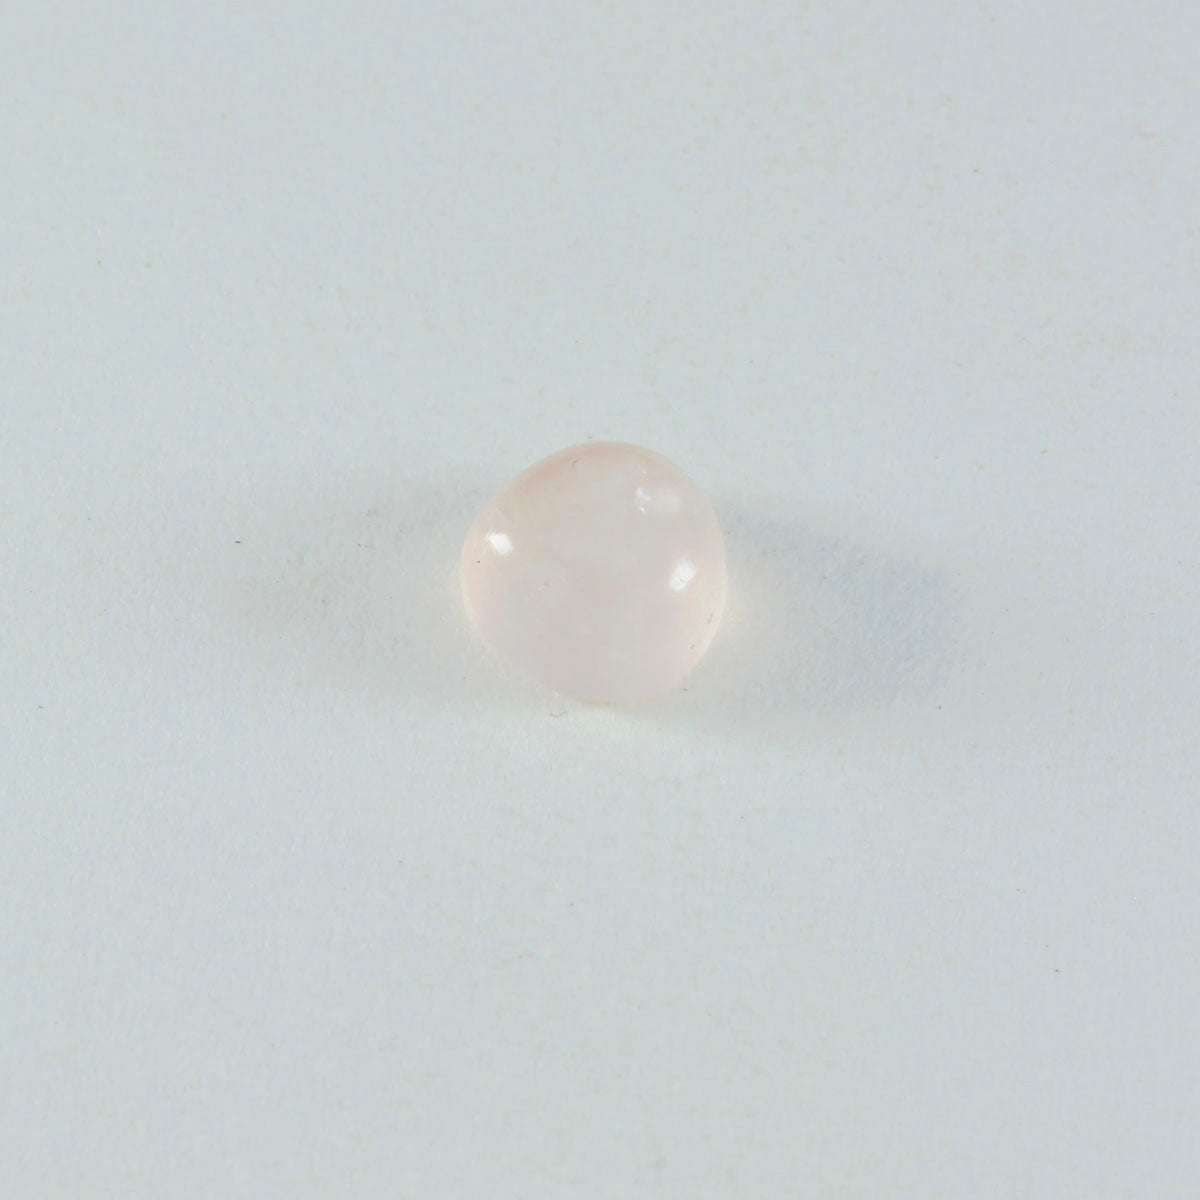 riyogems 1 шт. кабошон из розового кварца 13x13 мм в форме сердца A+ качество свободный камень